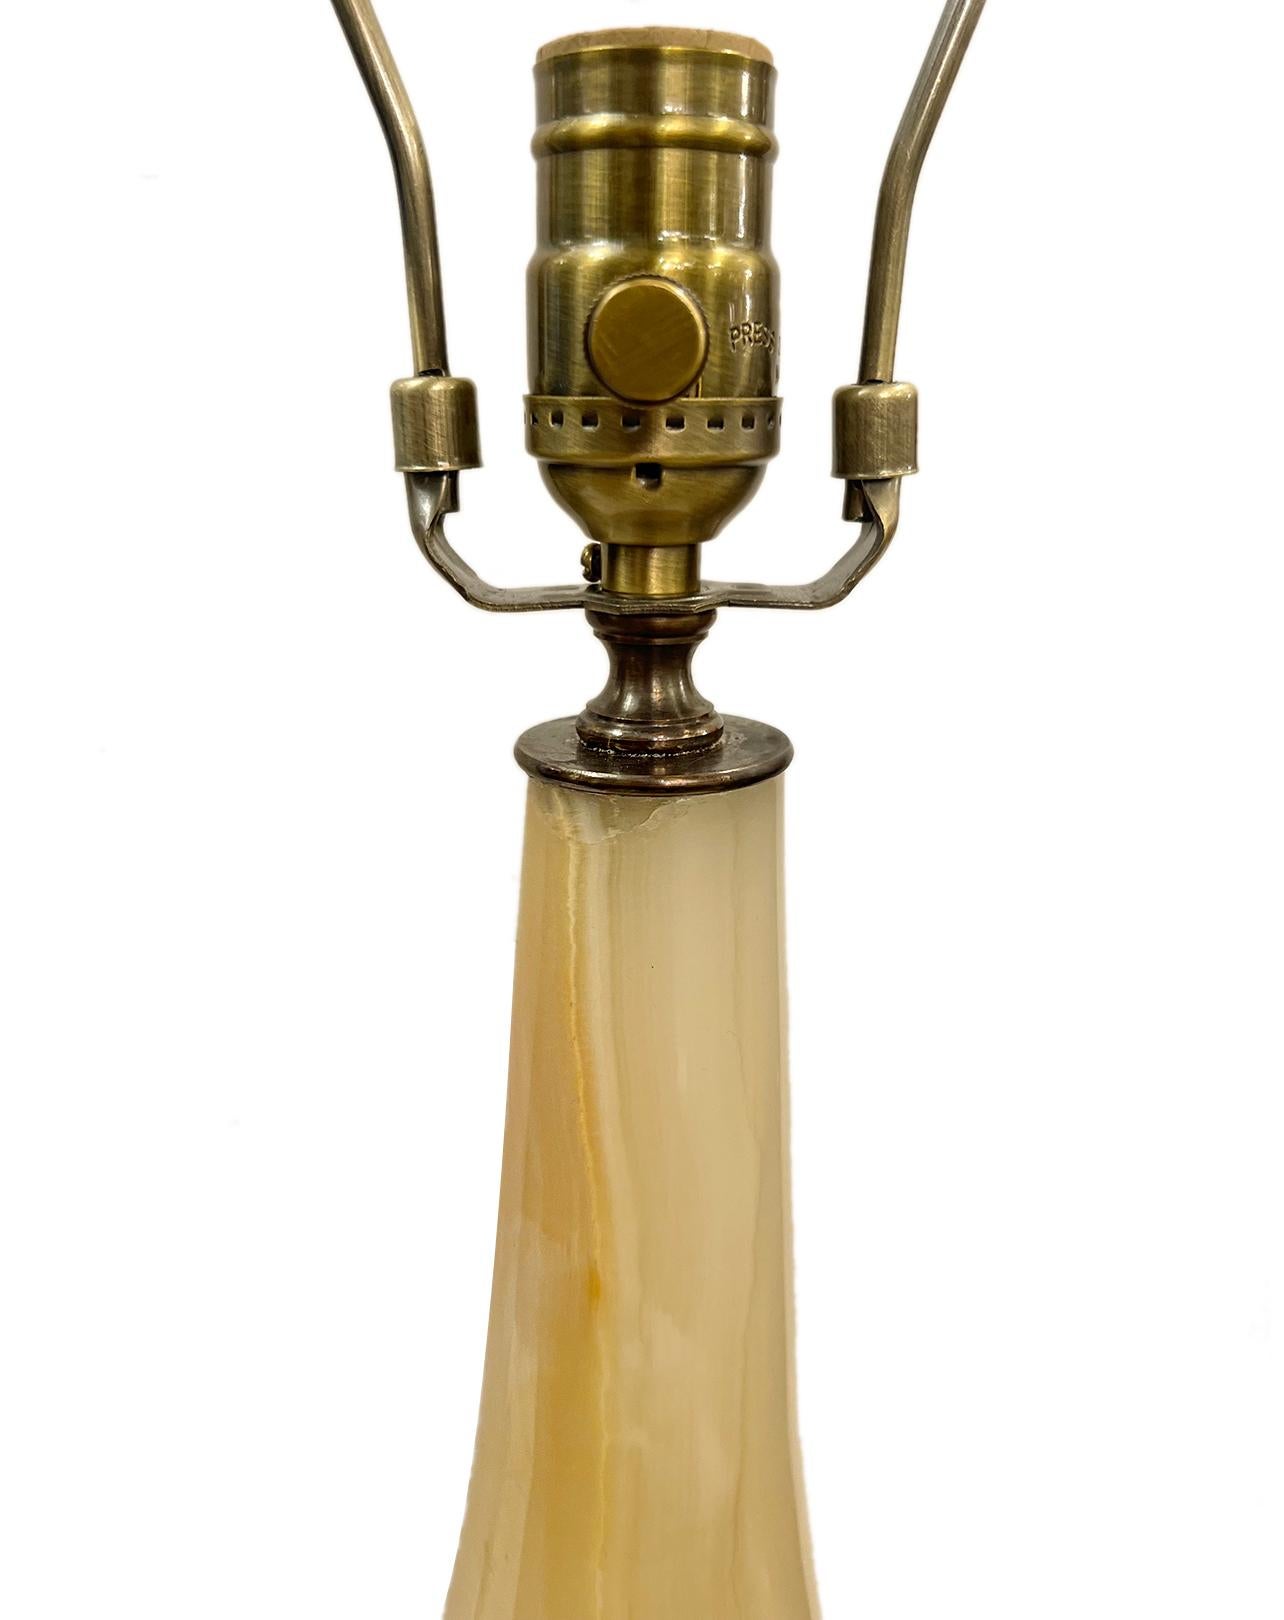 Pair of circa 1920's Italian onyx column lamps.

Measurements:
Height of body: 20